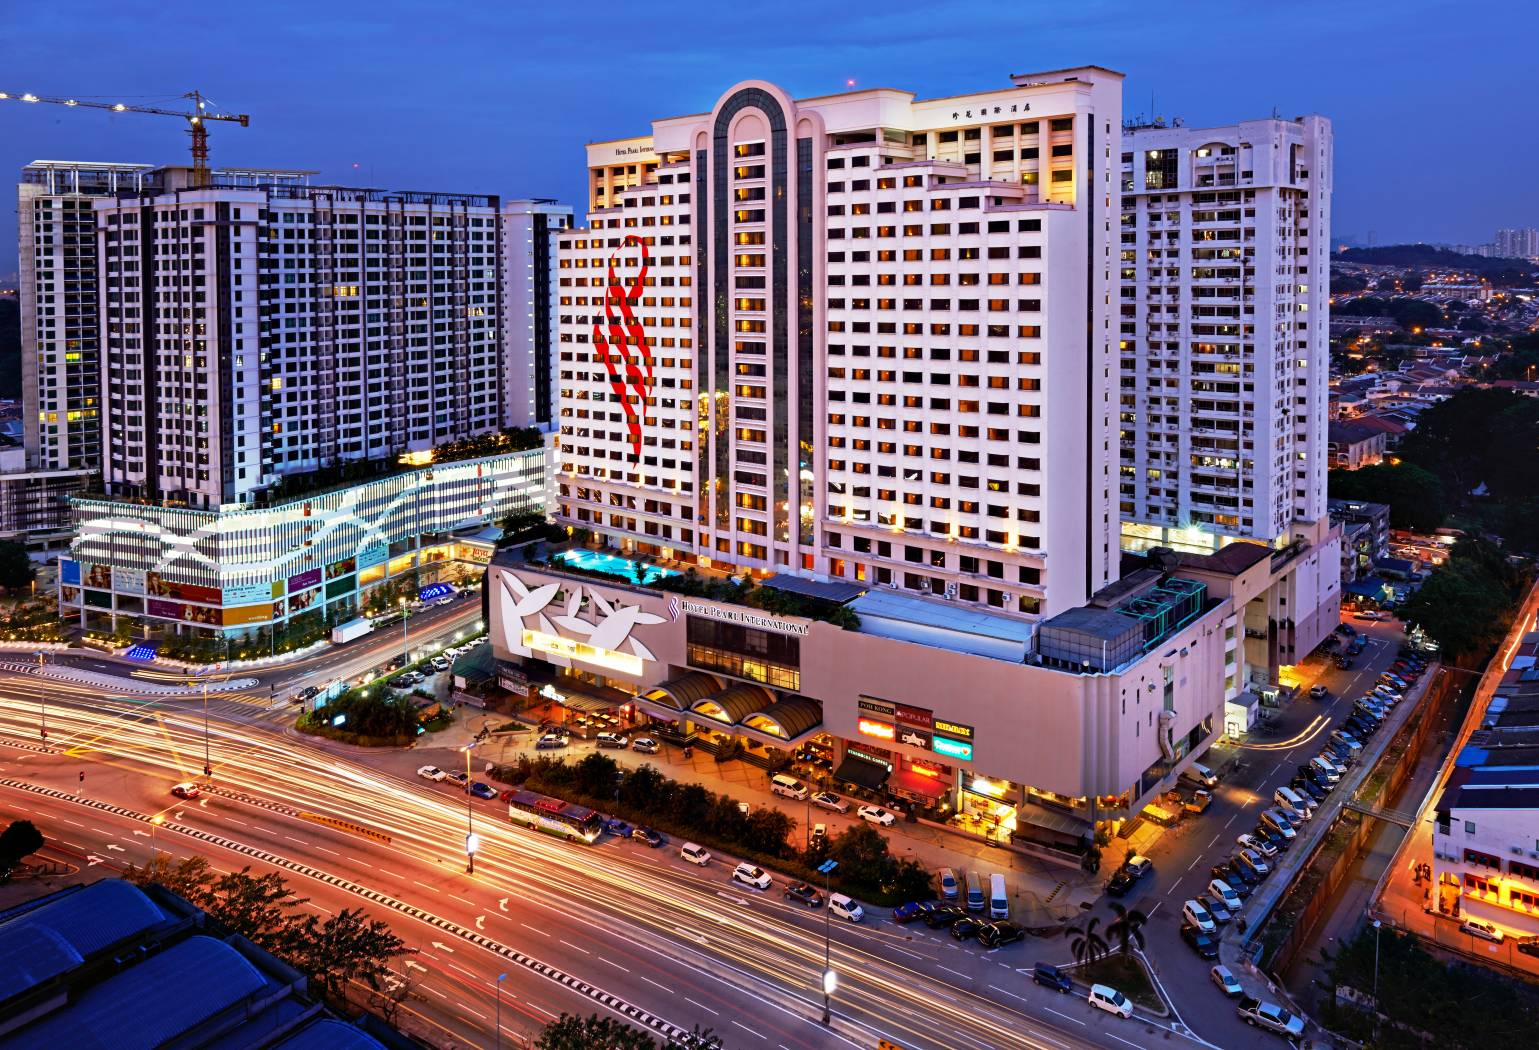  best hotel in malaysia	